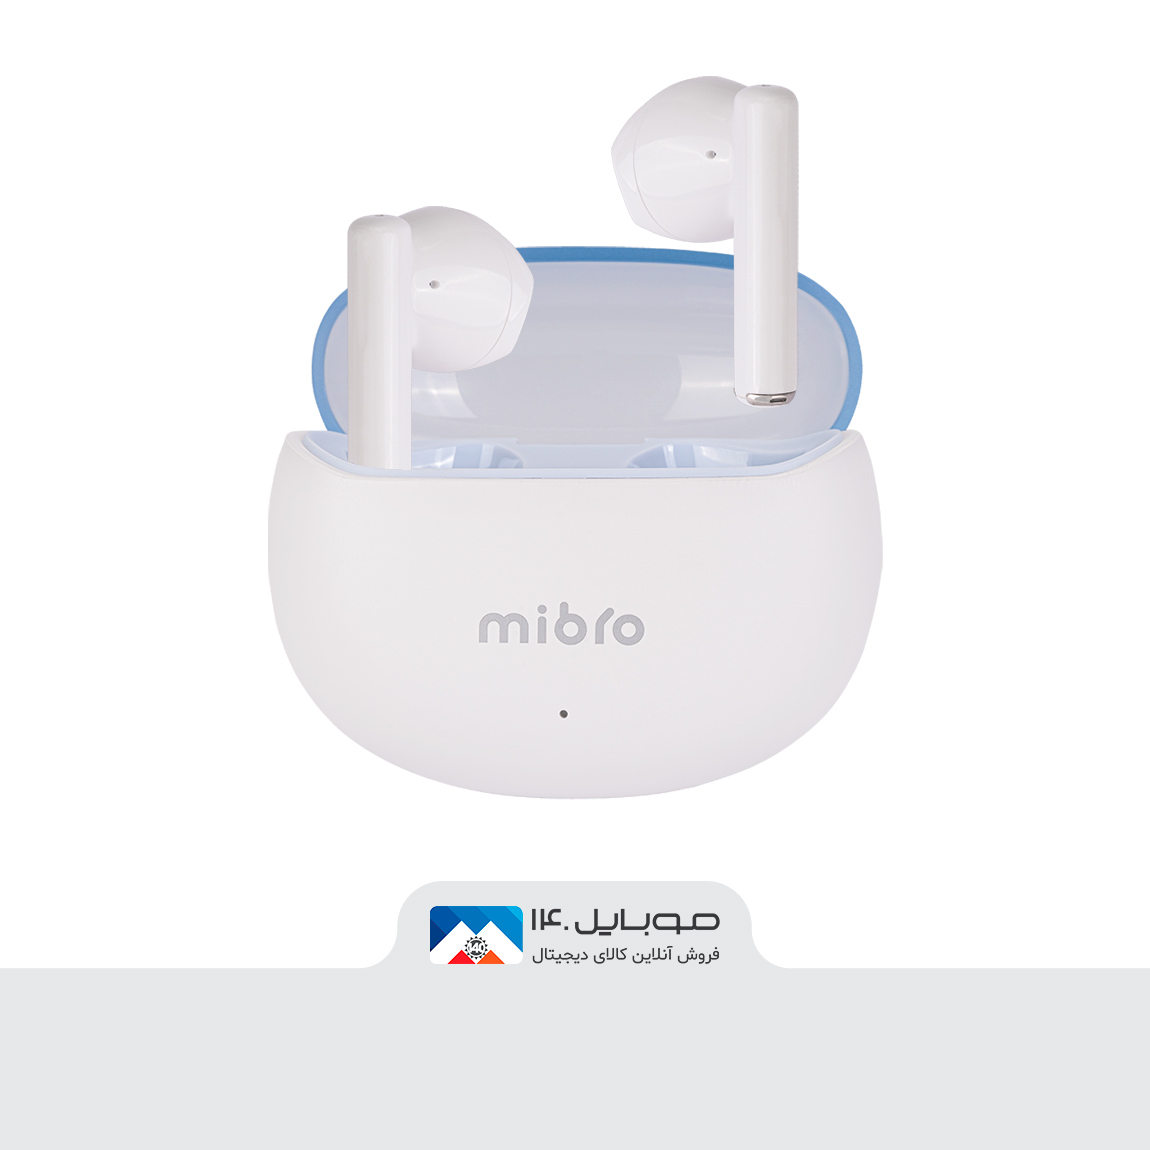 Mibro Earbuds 2 Bluetooth Handsfree 6